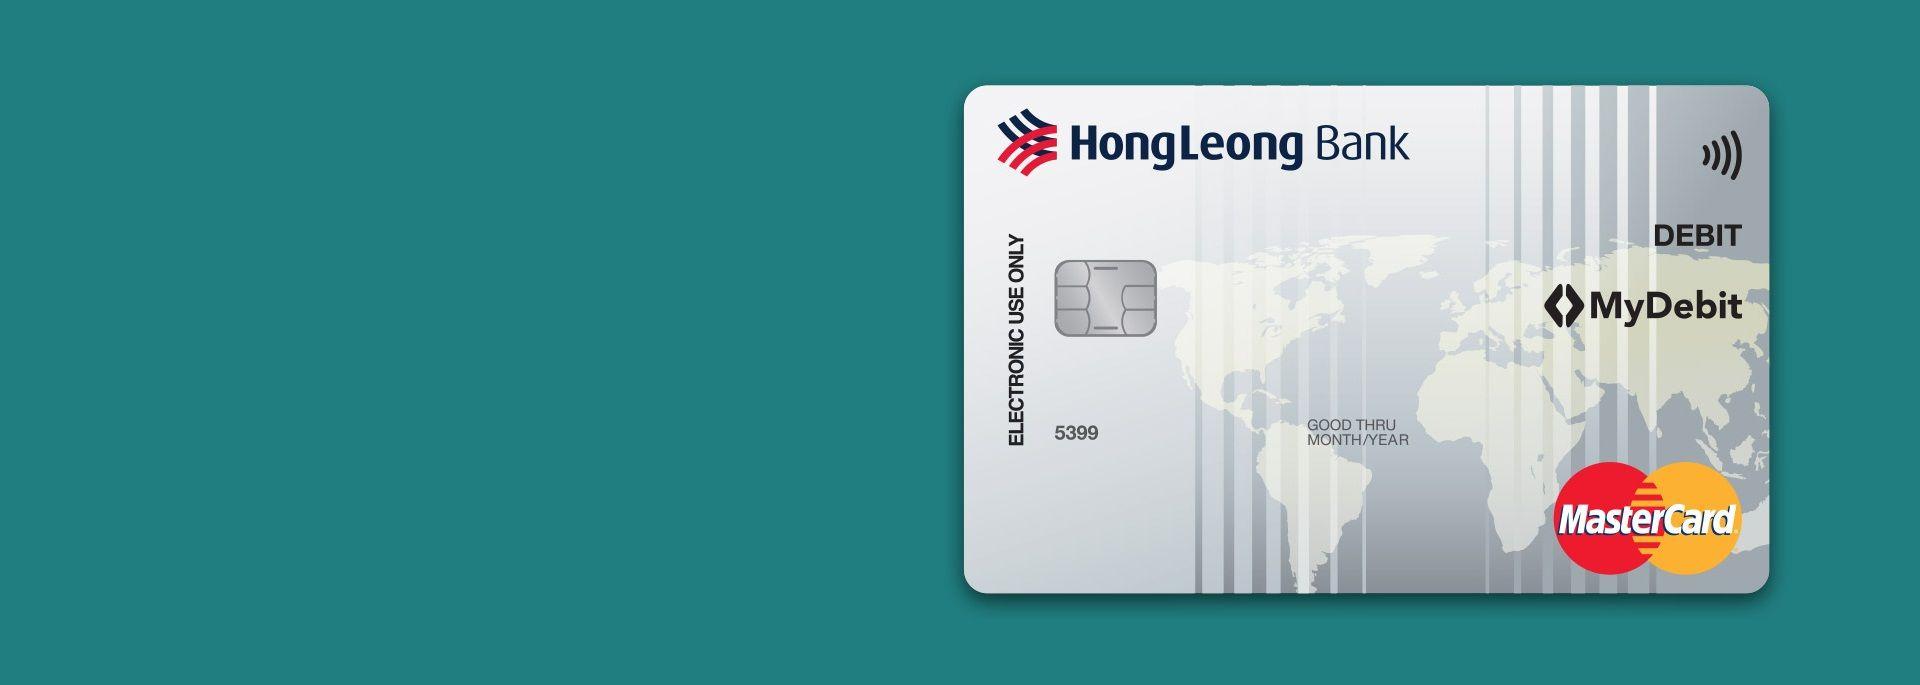 Generic Bank Logo - Hong Leong Bank Malaysia - Debit Card